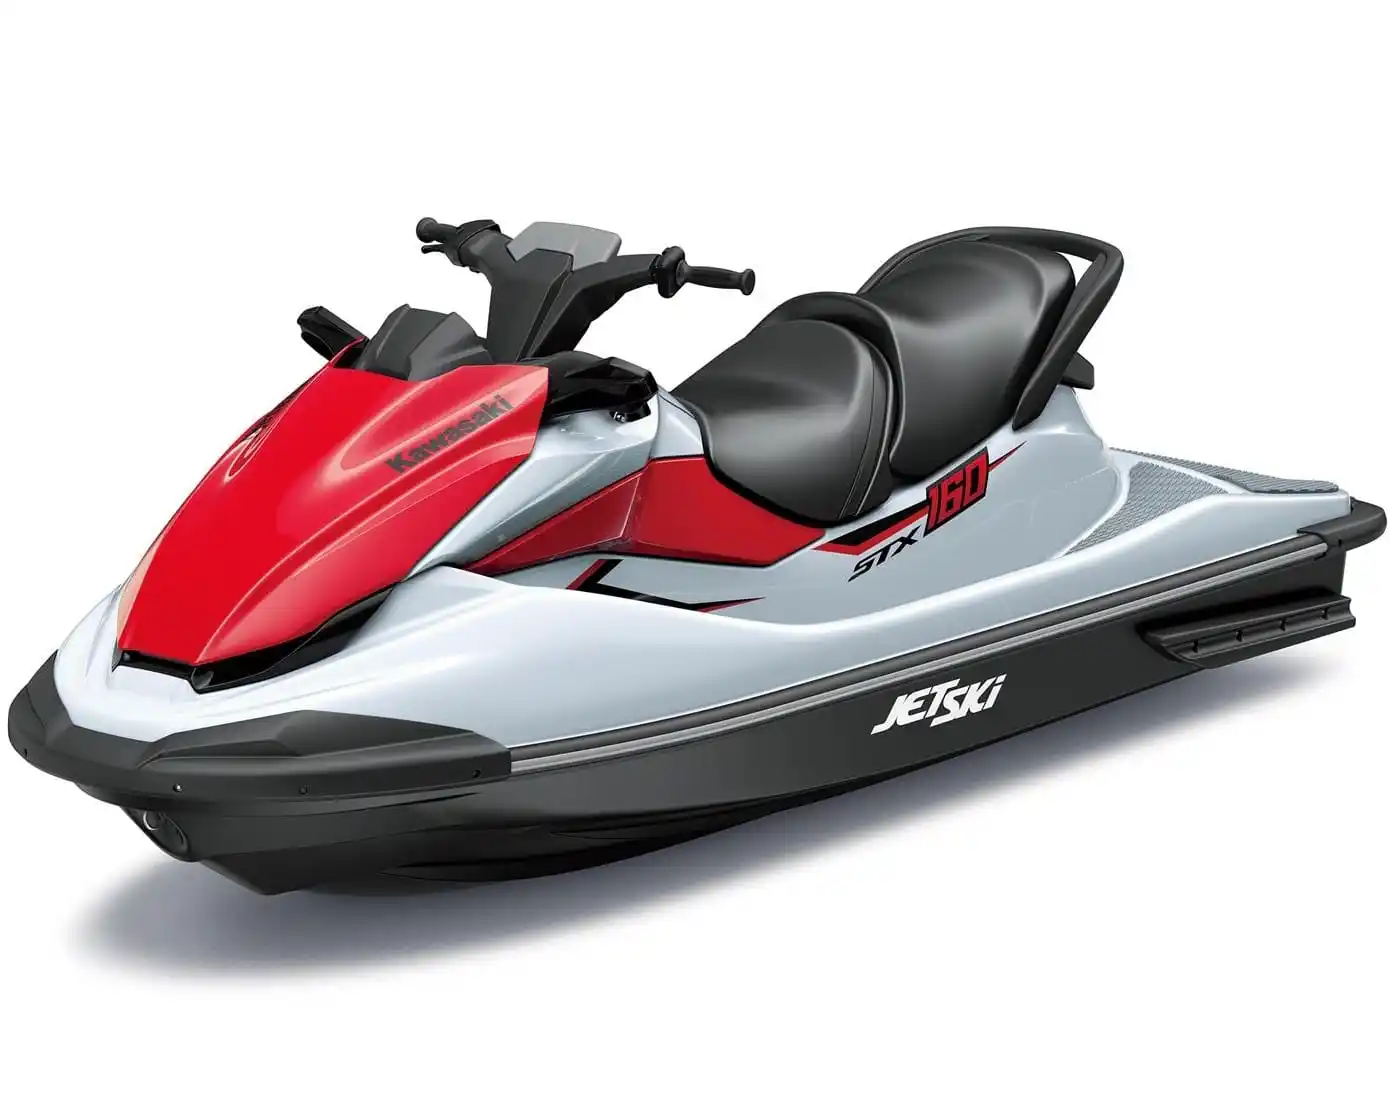 New Authentic 2023 jet ski Comfortable Water Luxury Sea-doo / Sea doo GTI-X 130 jet ski / Jet ski available